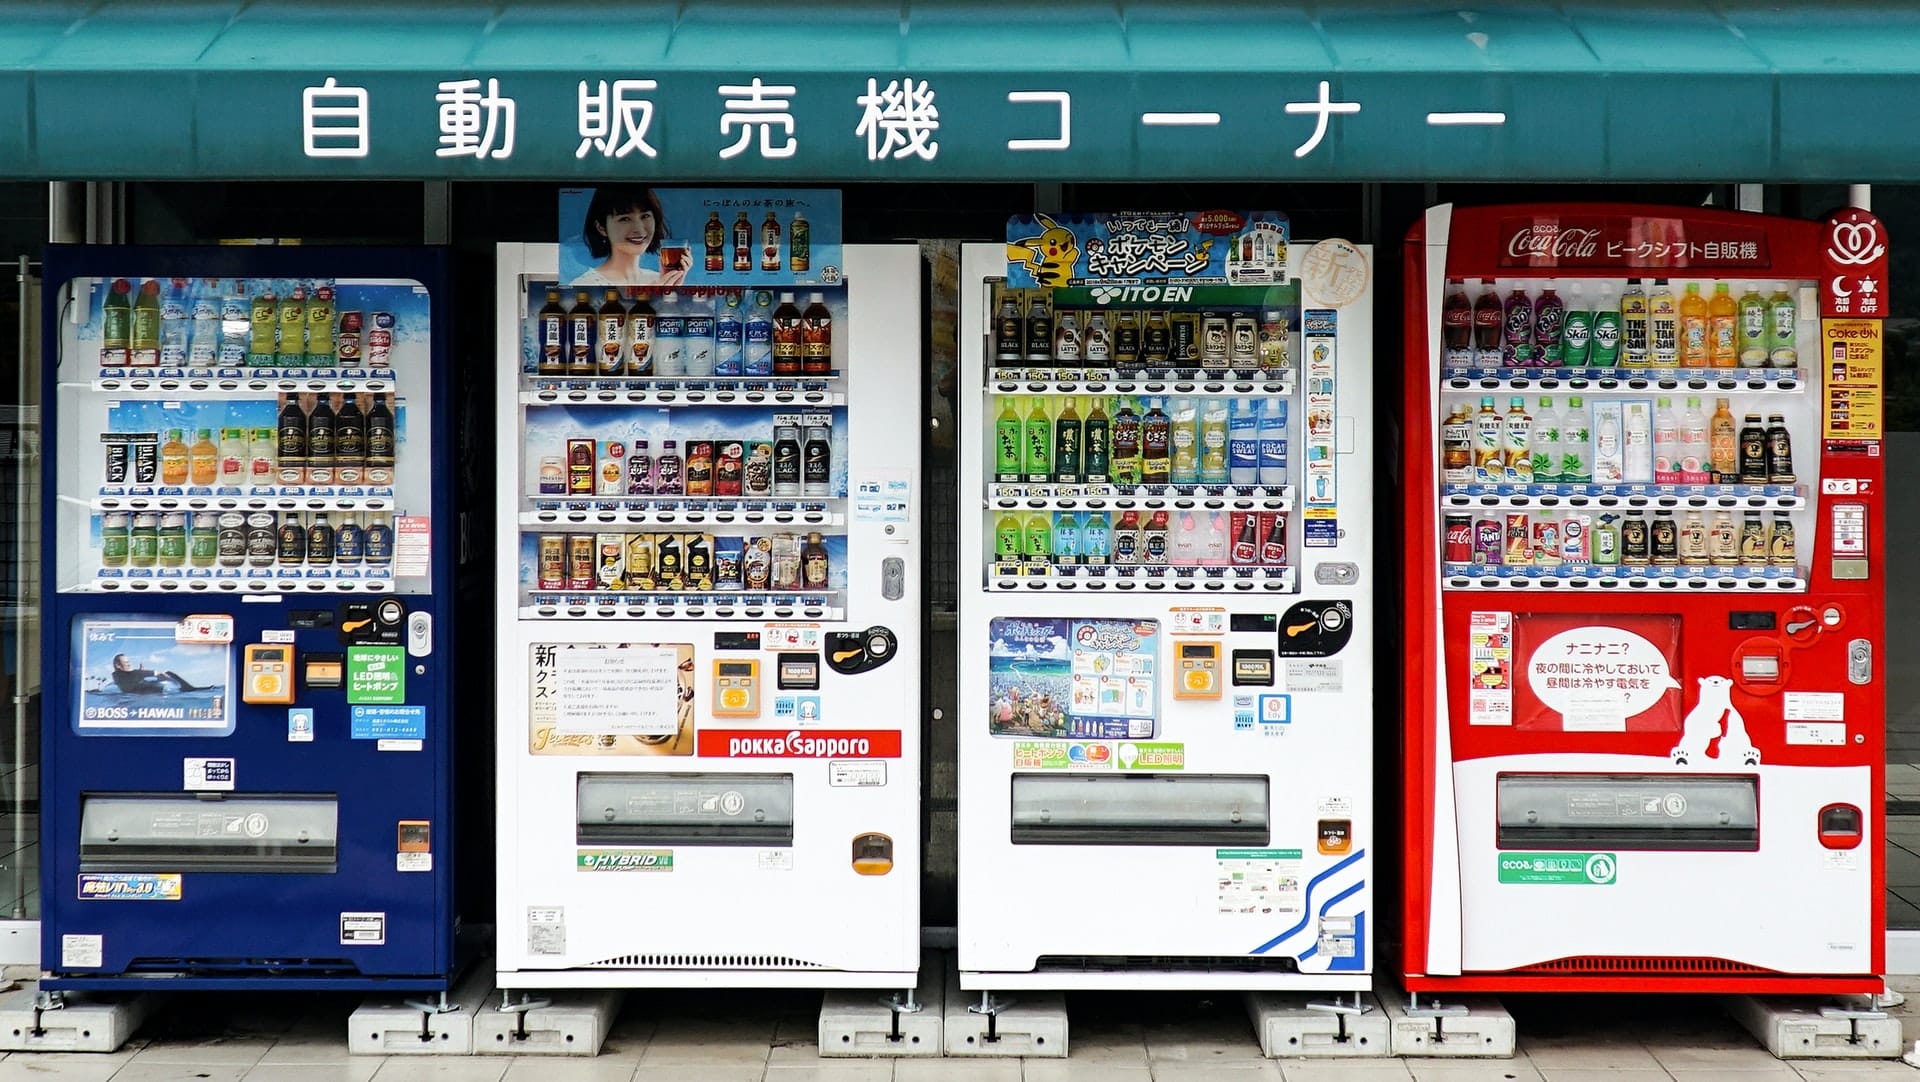 Start your vending machine business